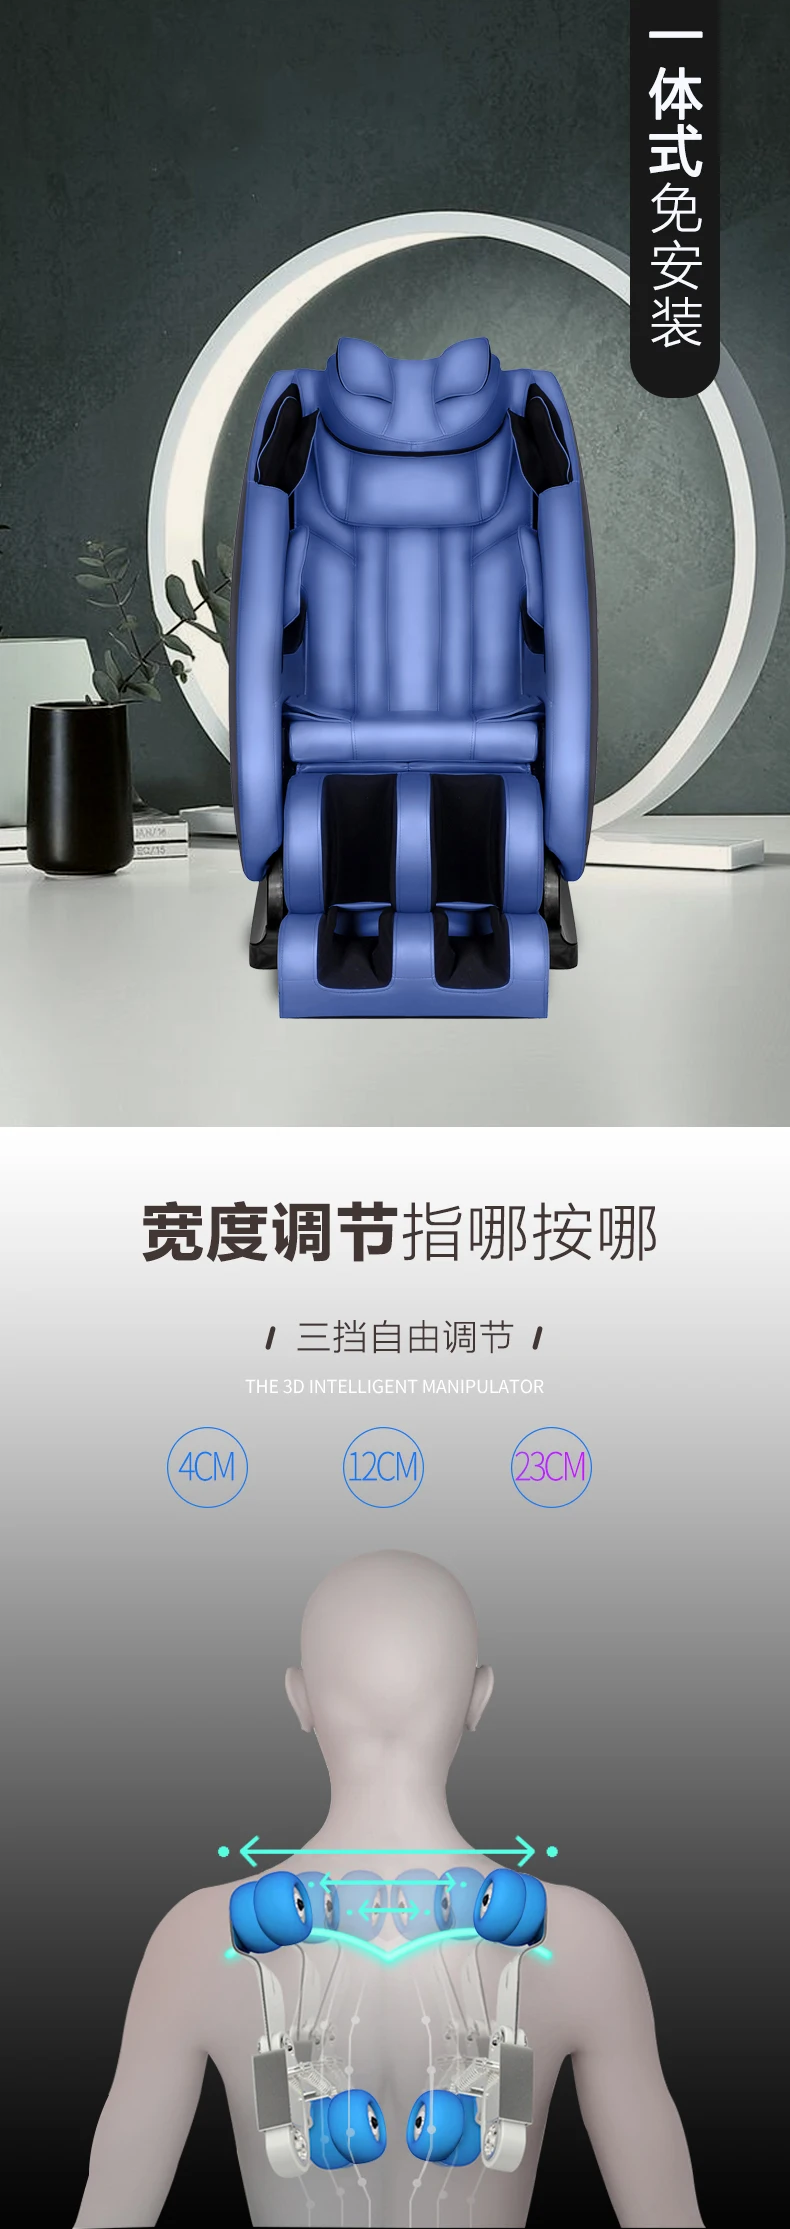 Electric Deluxe 3D Full Body Shiatsu 4D Zero Gravity Foot SPA Multifunctional Cheap Massage Chair